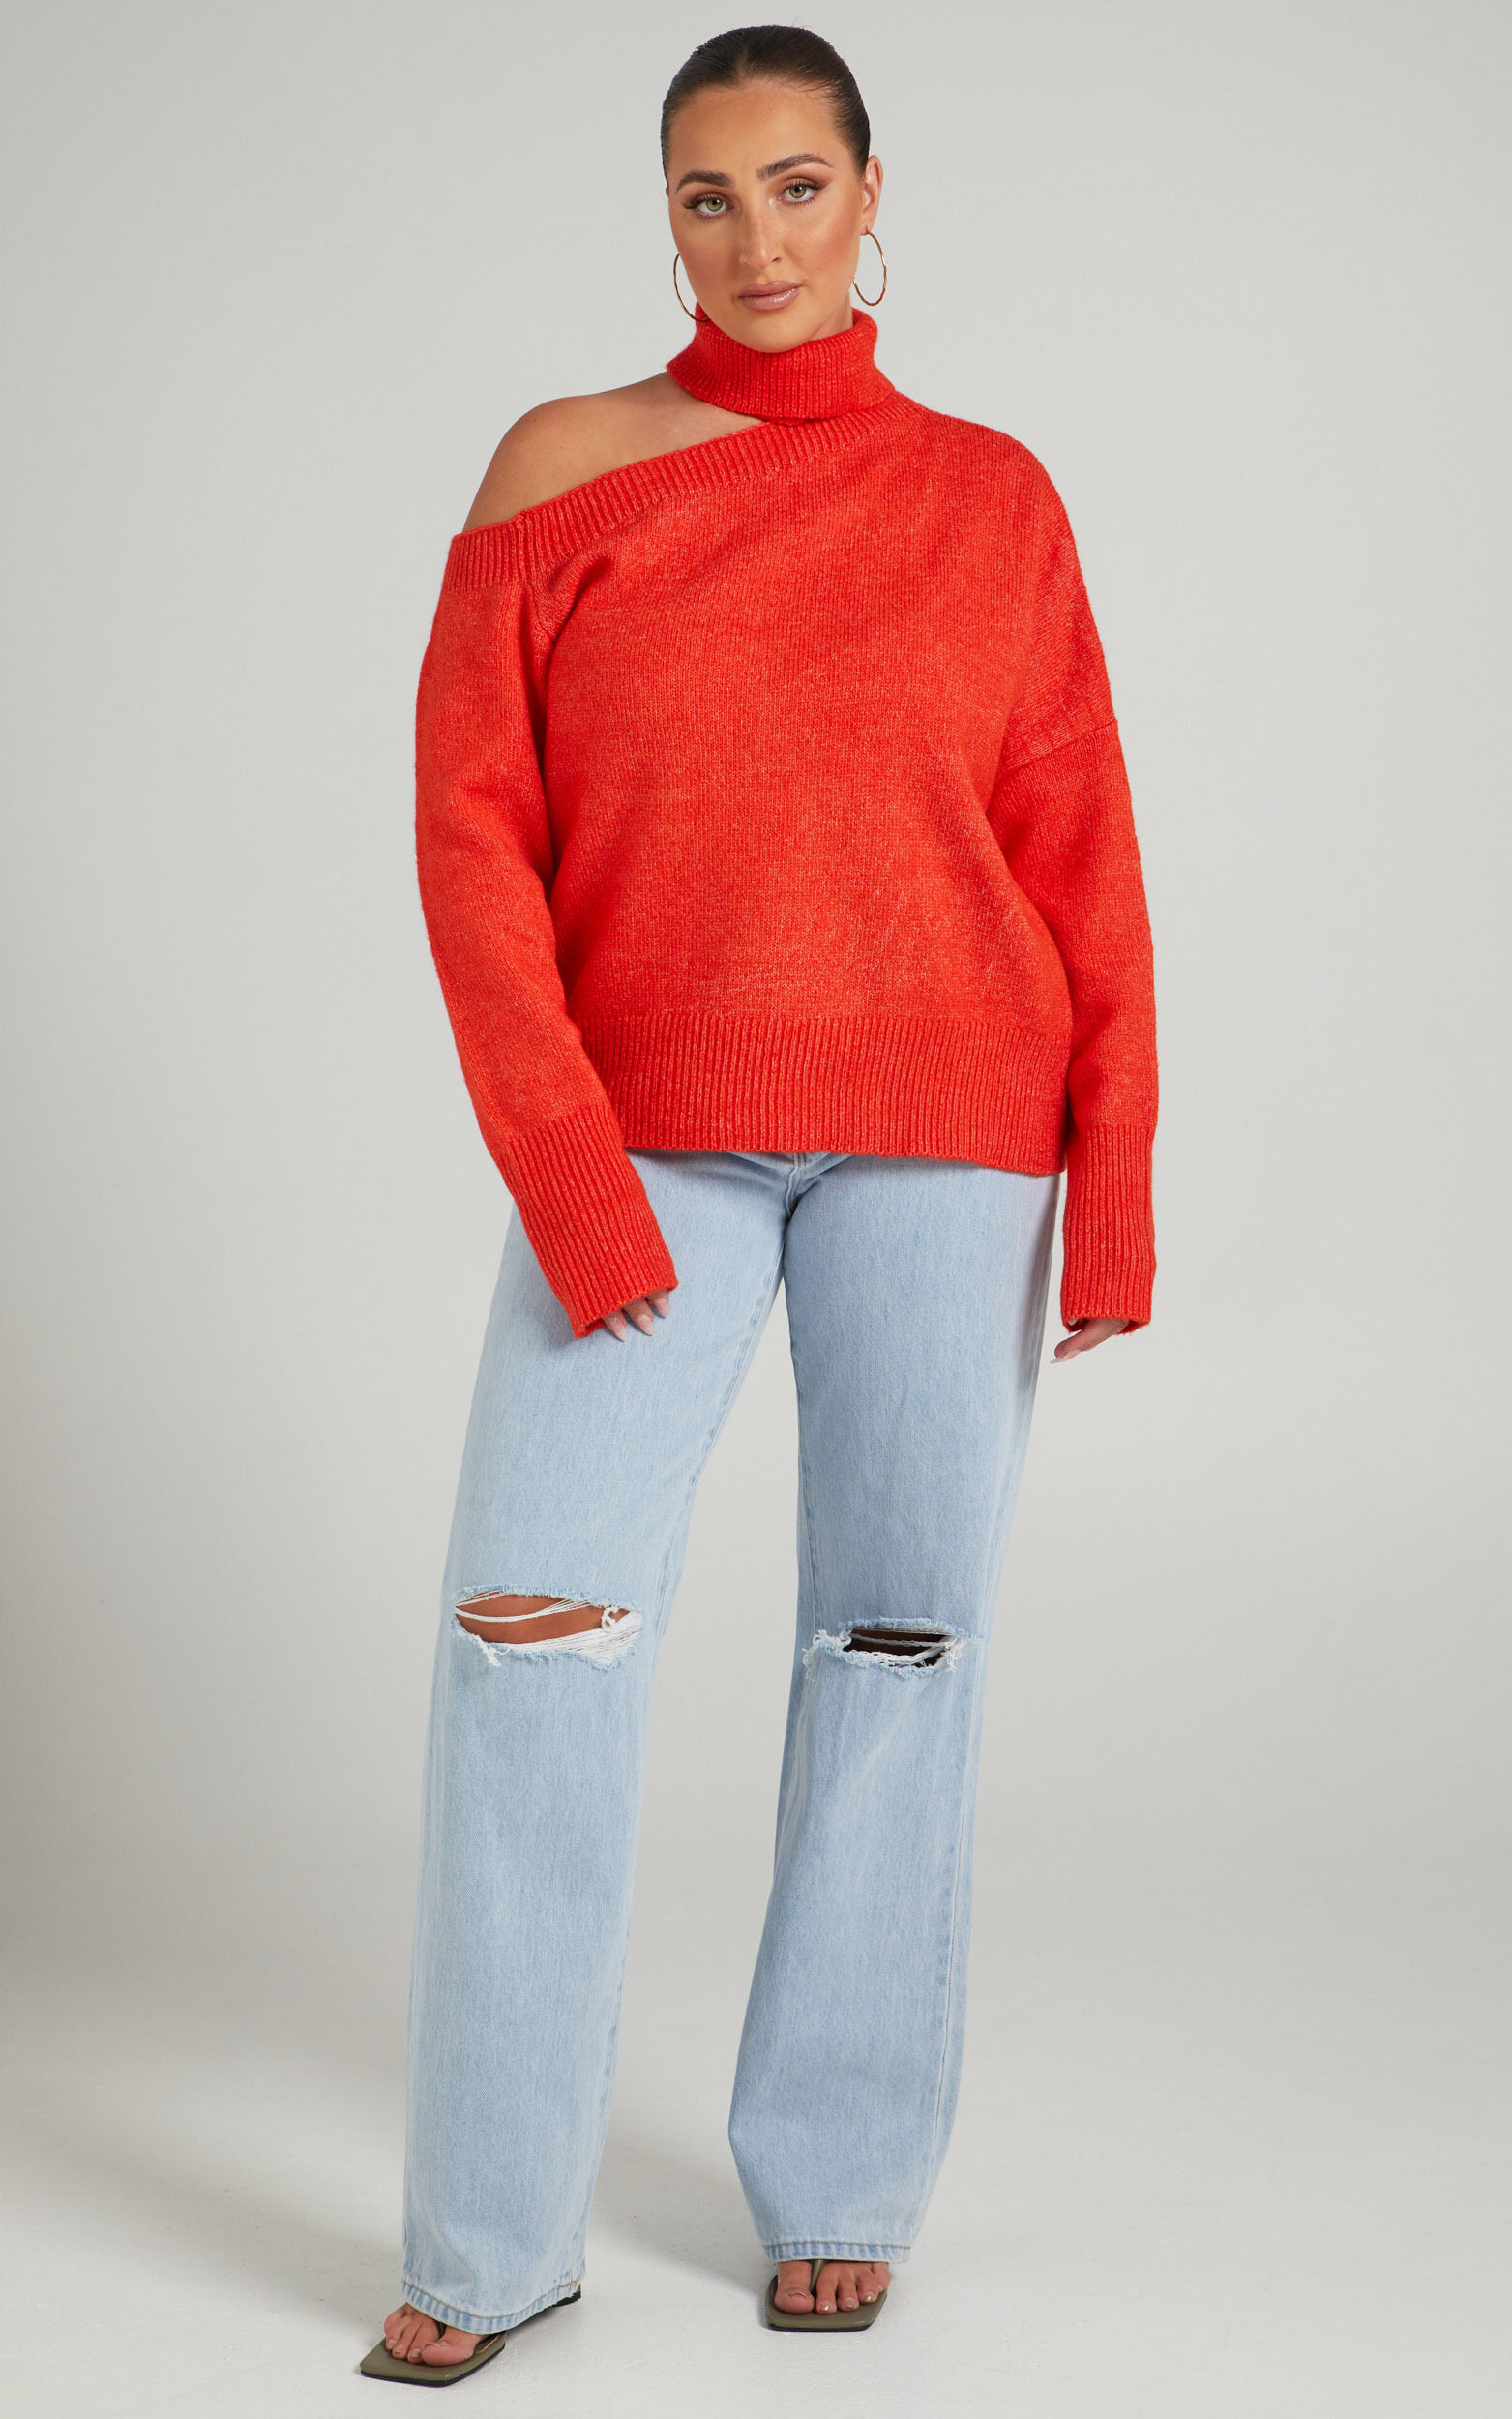 Ceila Knit Top with Shoulder Cut Out in Orange - 06, ORG2, super-hi-res image number null